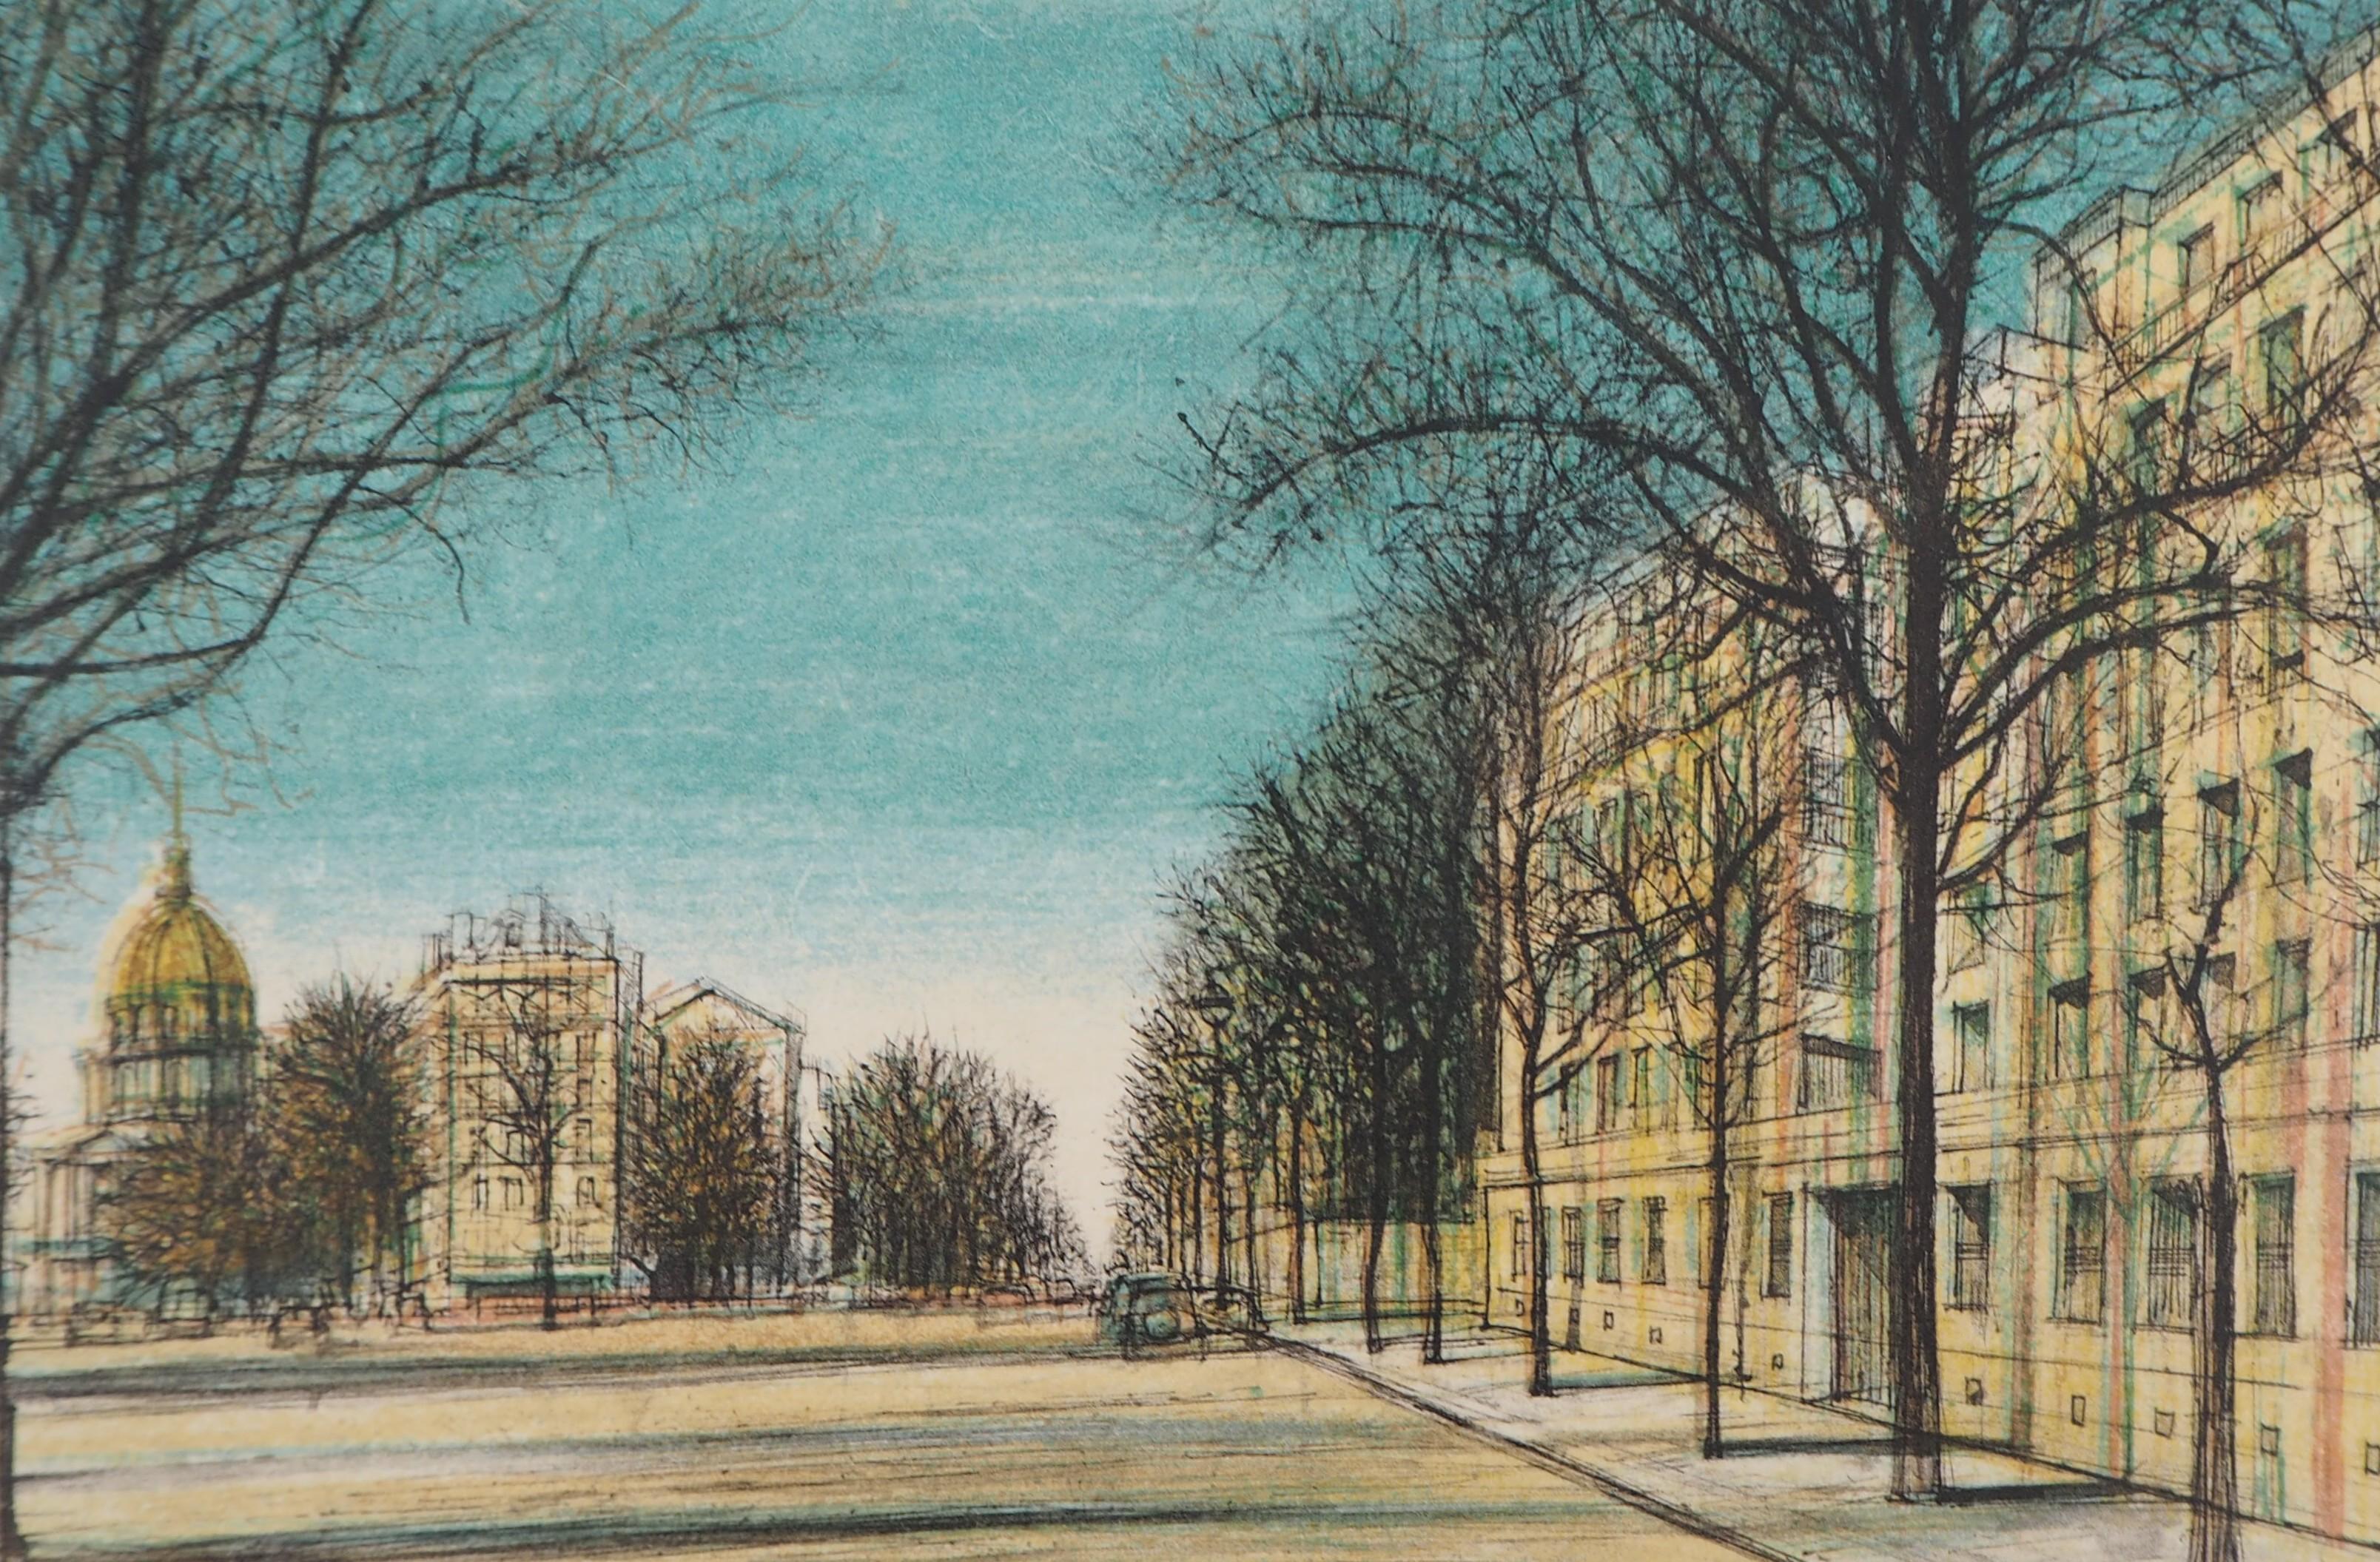 Paris: Boulevard des Invalides - Original Handsigned Lithograph, 1958 - Modern Print by Jean Carzou